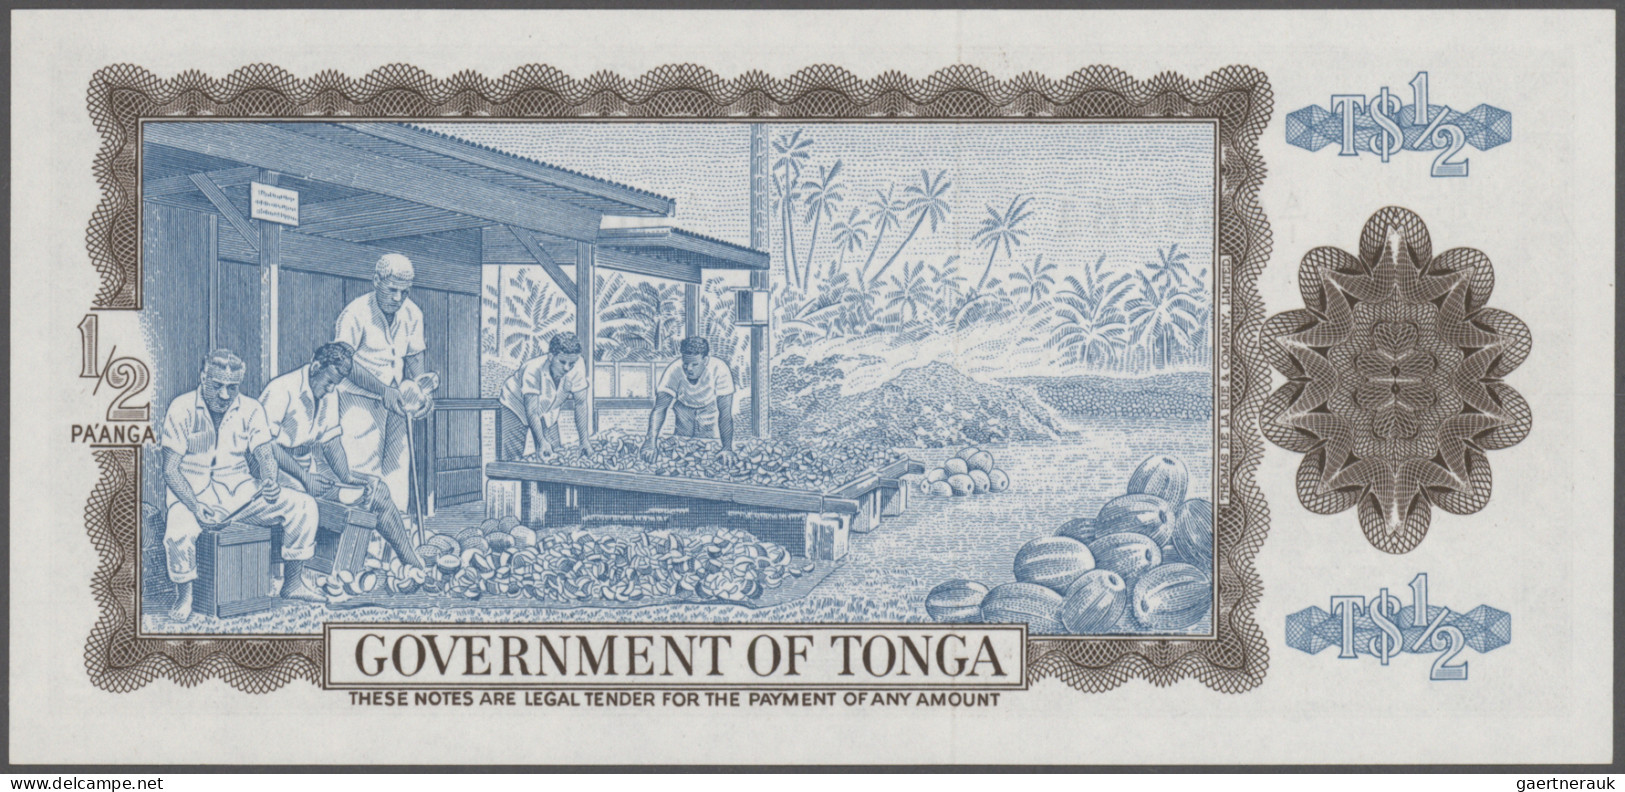 Tonga: Government Of Tonga, ½ Pa'anga 1967, P.13a In UNC Condition. - Tonga